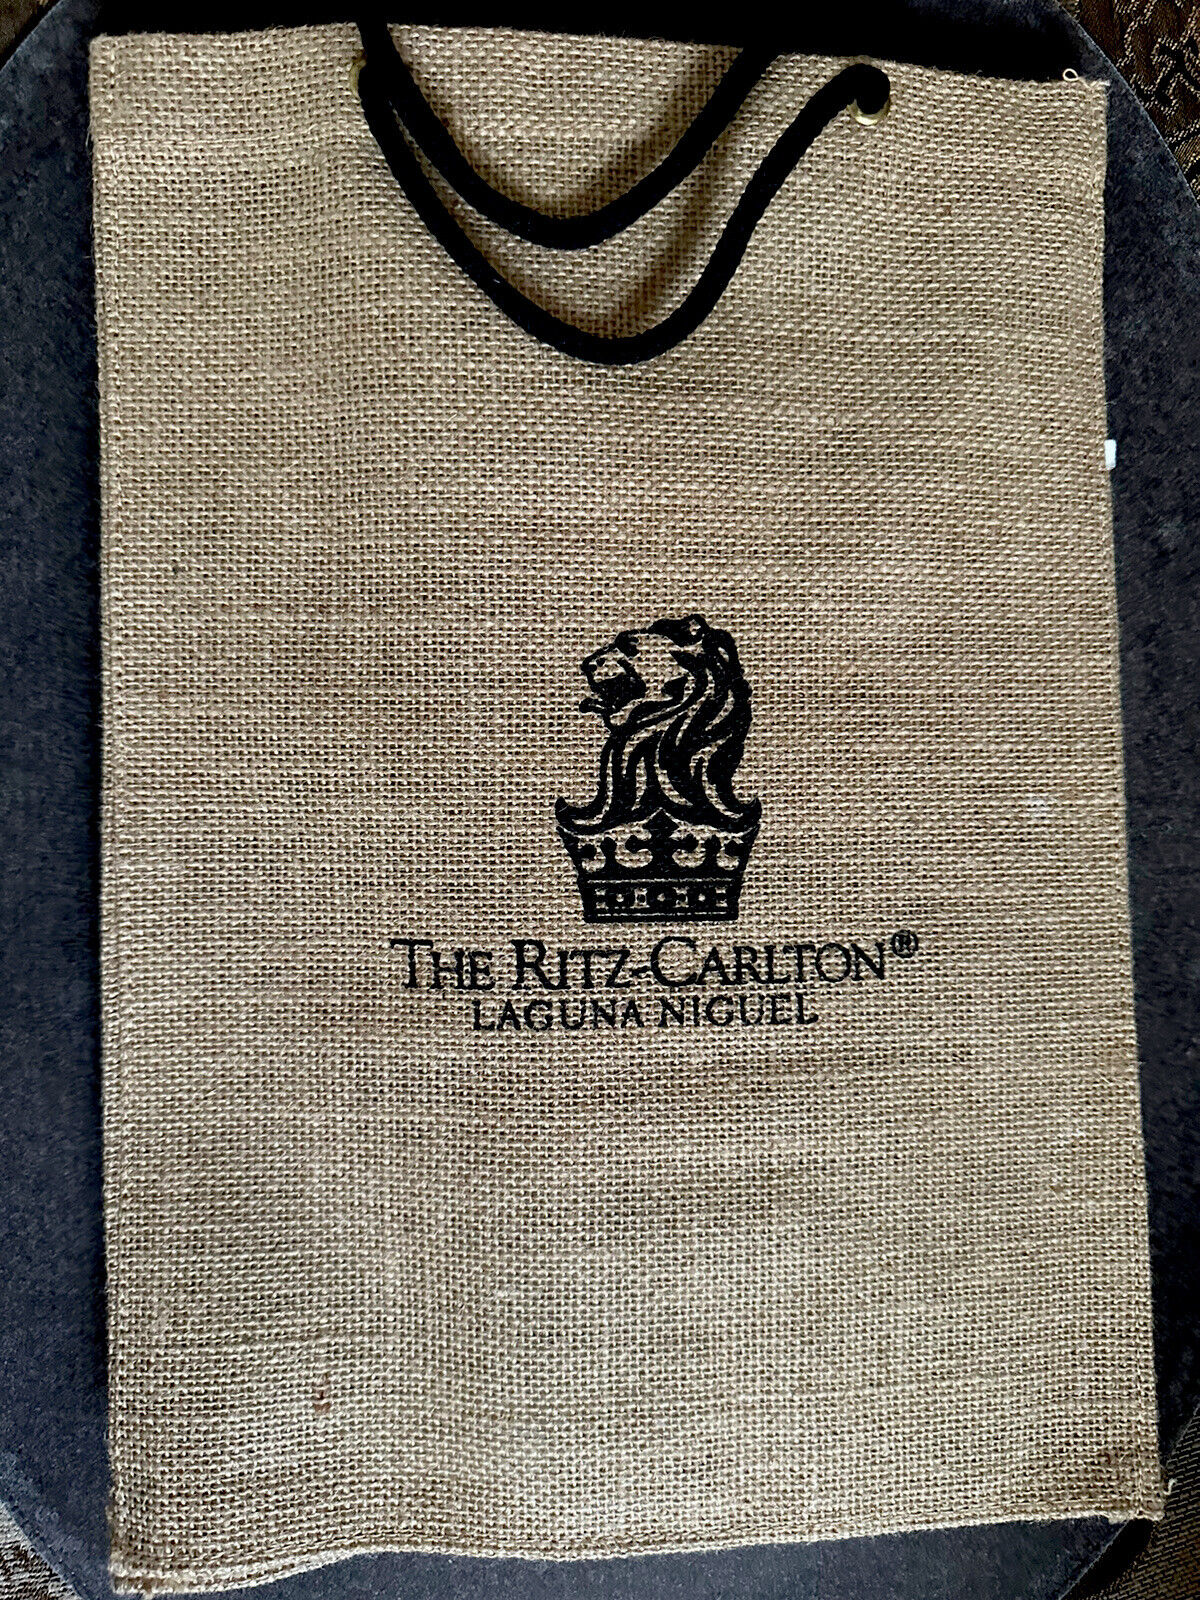 The Ritz Carlton Laguna Niguel Burlap decorative bag  13 1/2” x 9 1/2”